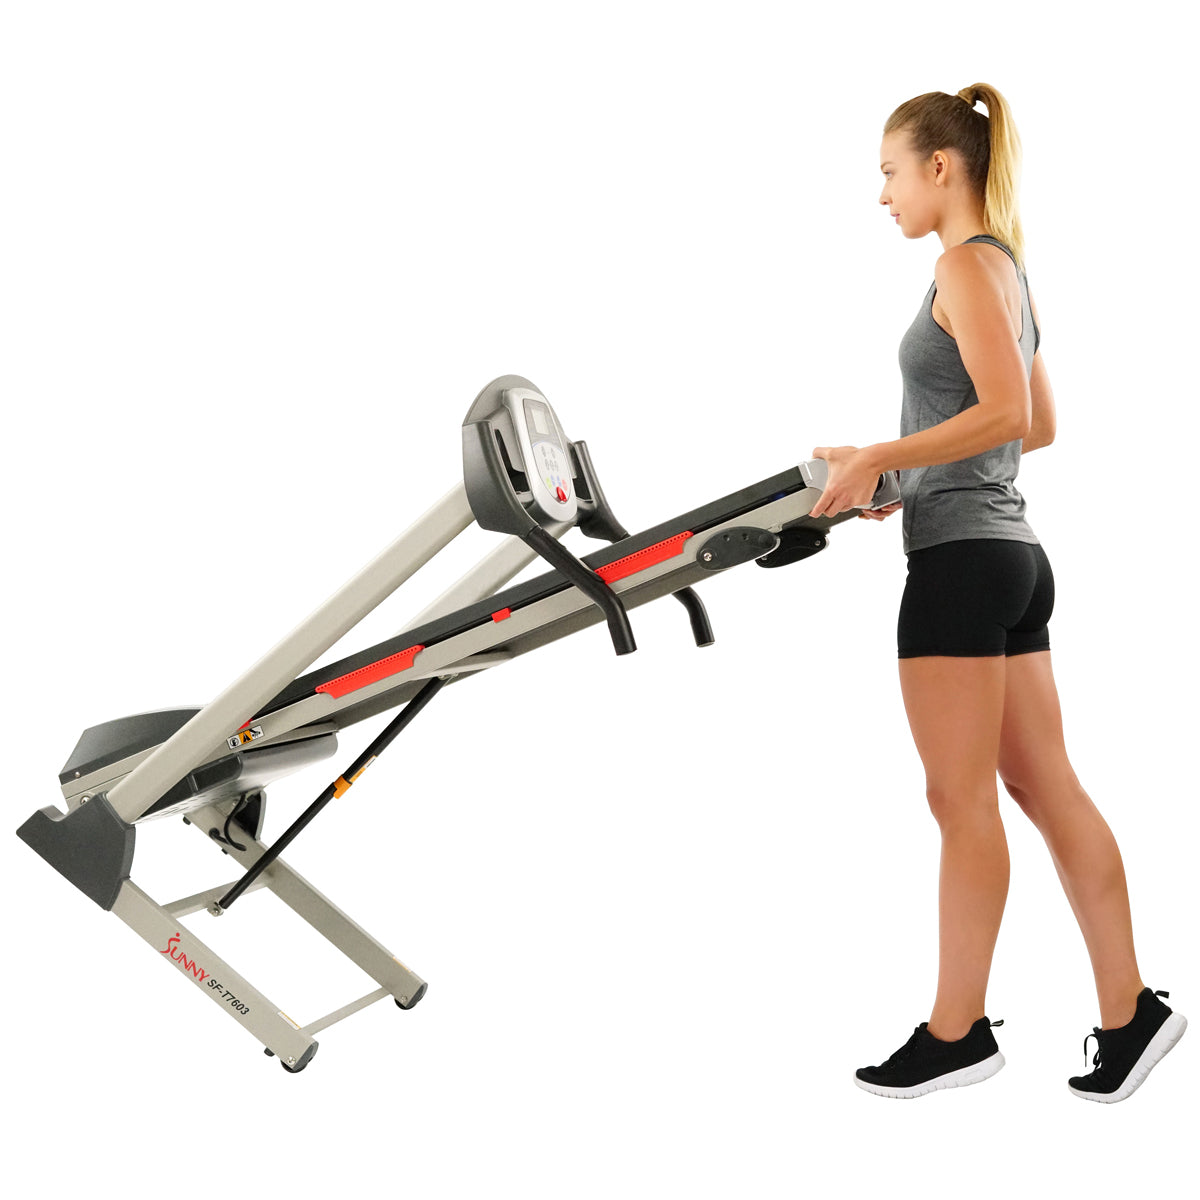 sunny-health-fitness-treadmills-electric-treadmill-9-programs-manual-incline-easy-handrail-controls-preset-button-speeds-SF-T7603-wheels